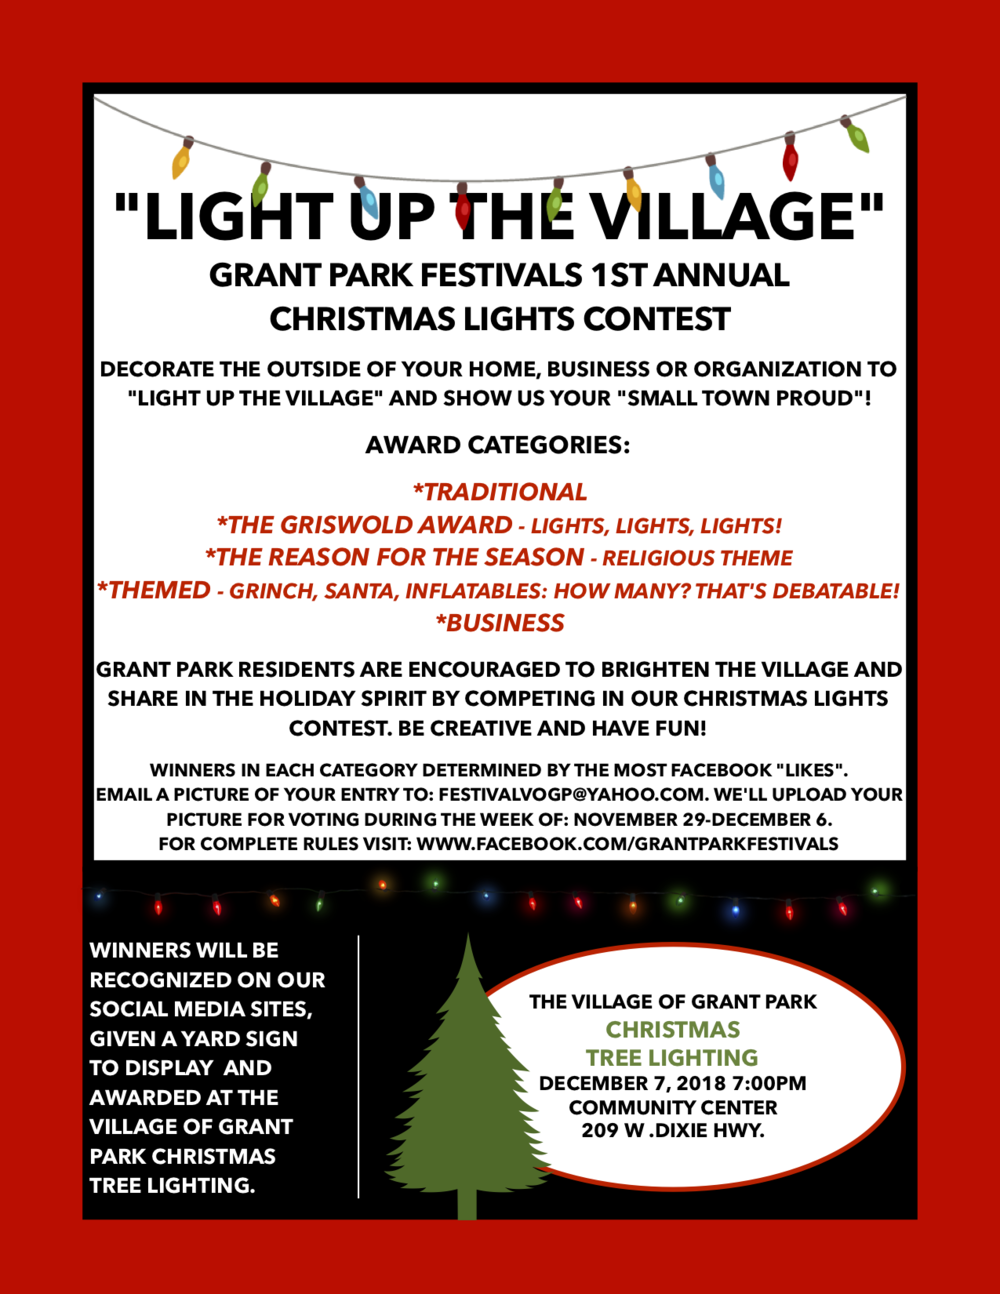 Grant Park Festivals 1ST Annual Christmas Lights Contest. "Light Up The Village"! — Grant IL